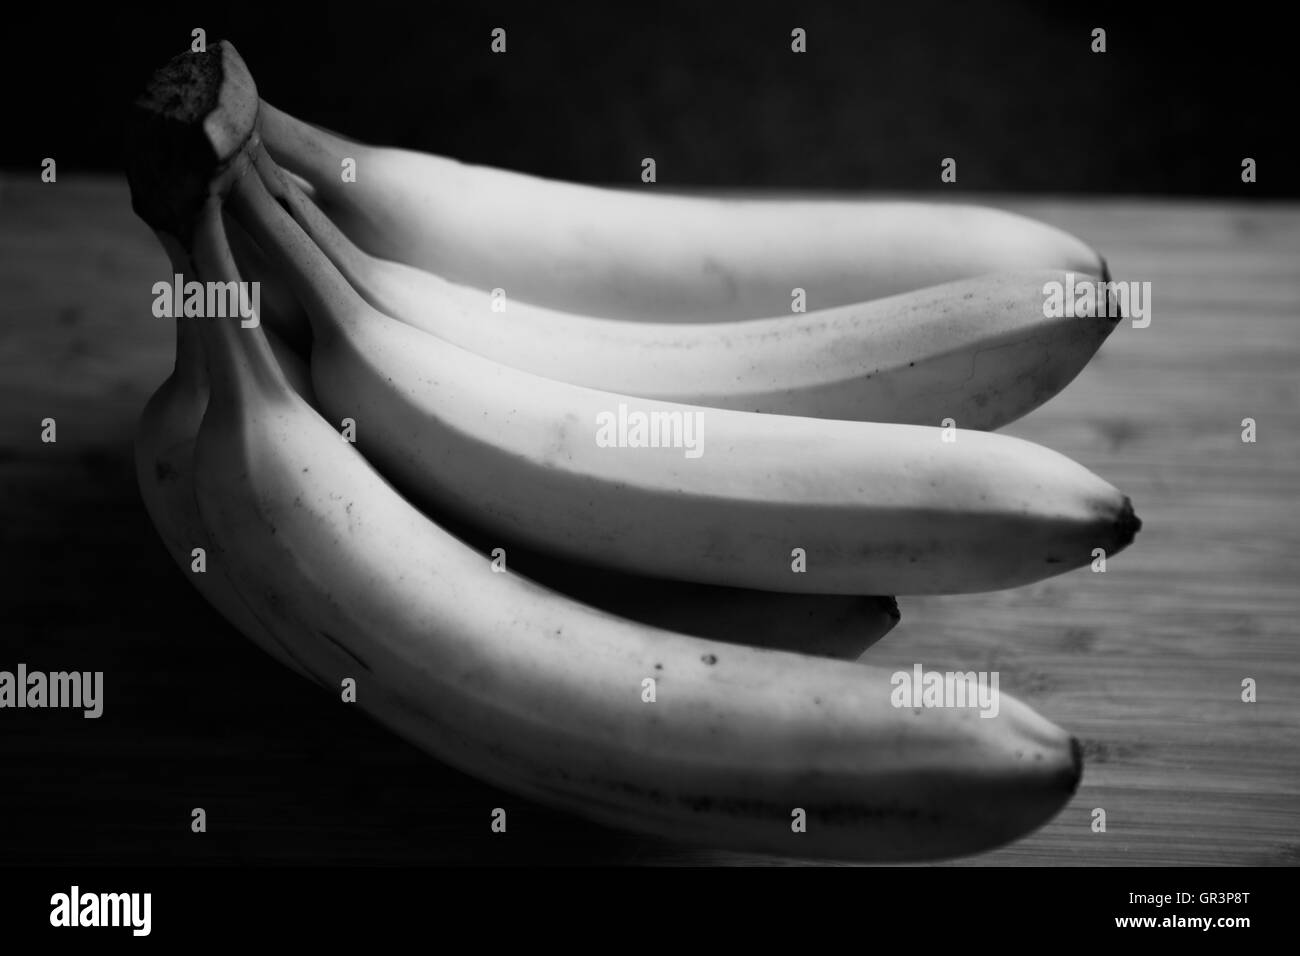 Banana black and white photography Stock Photo